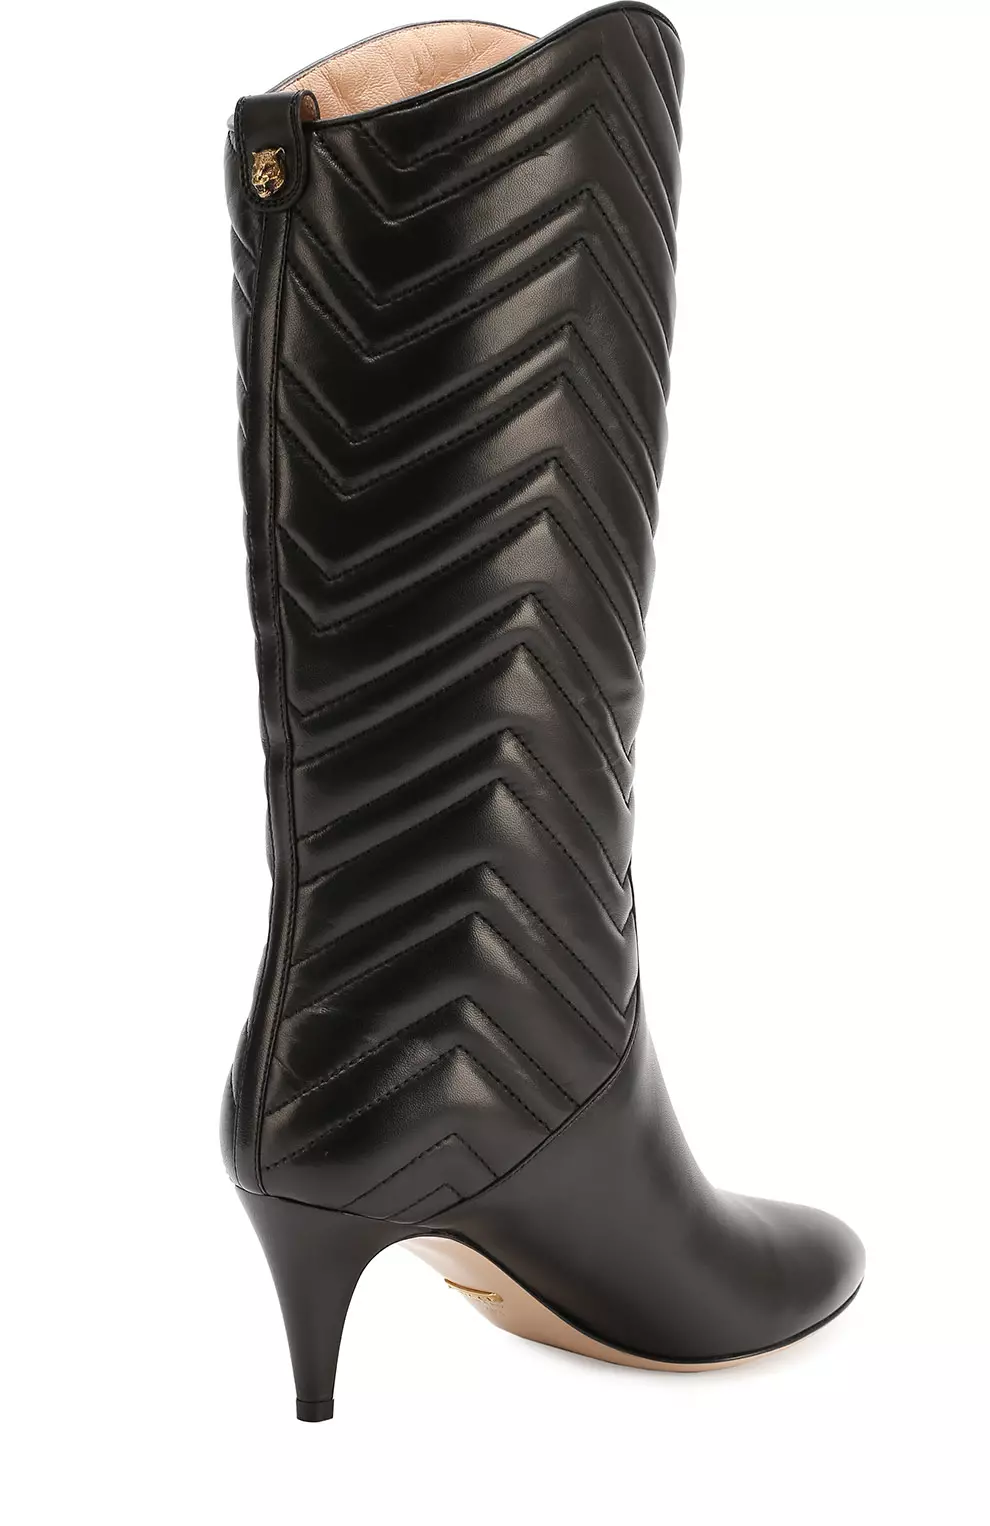 Gucci Boots (38 Foto): Model Wanita untuk Musim Sejuk 2208_19